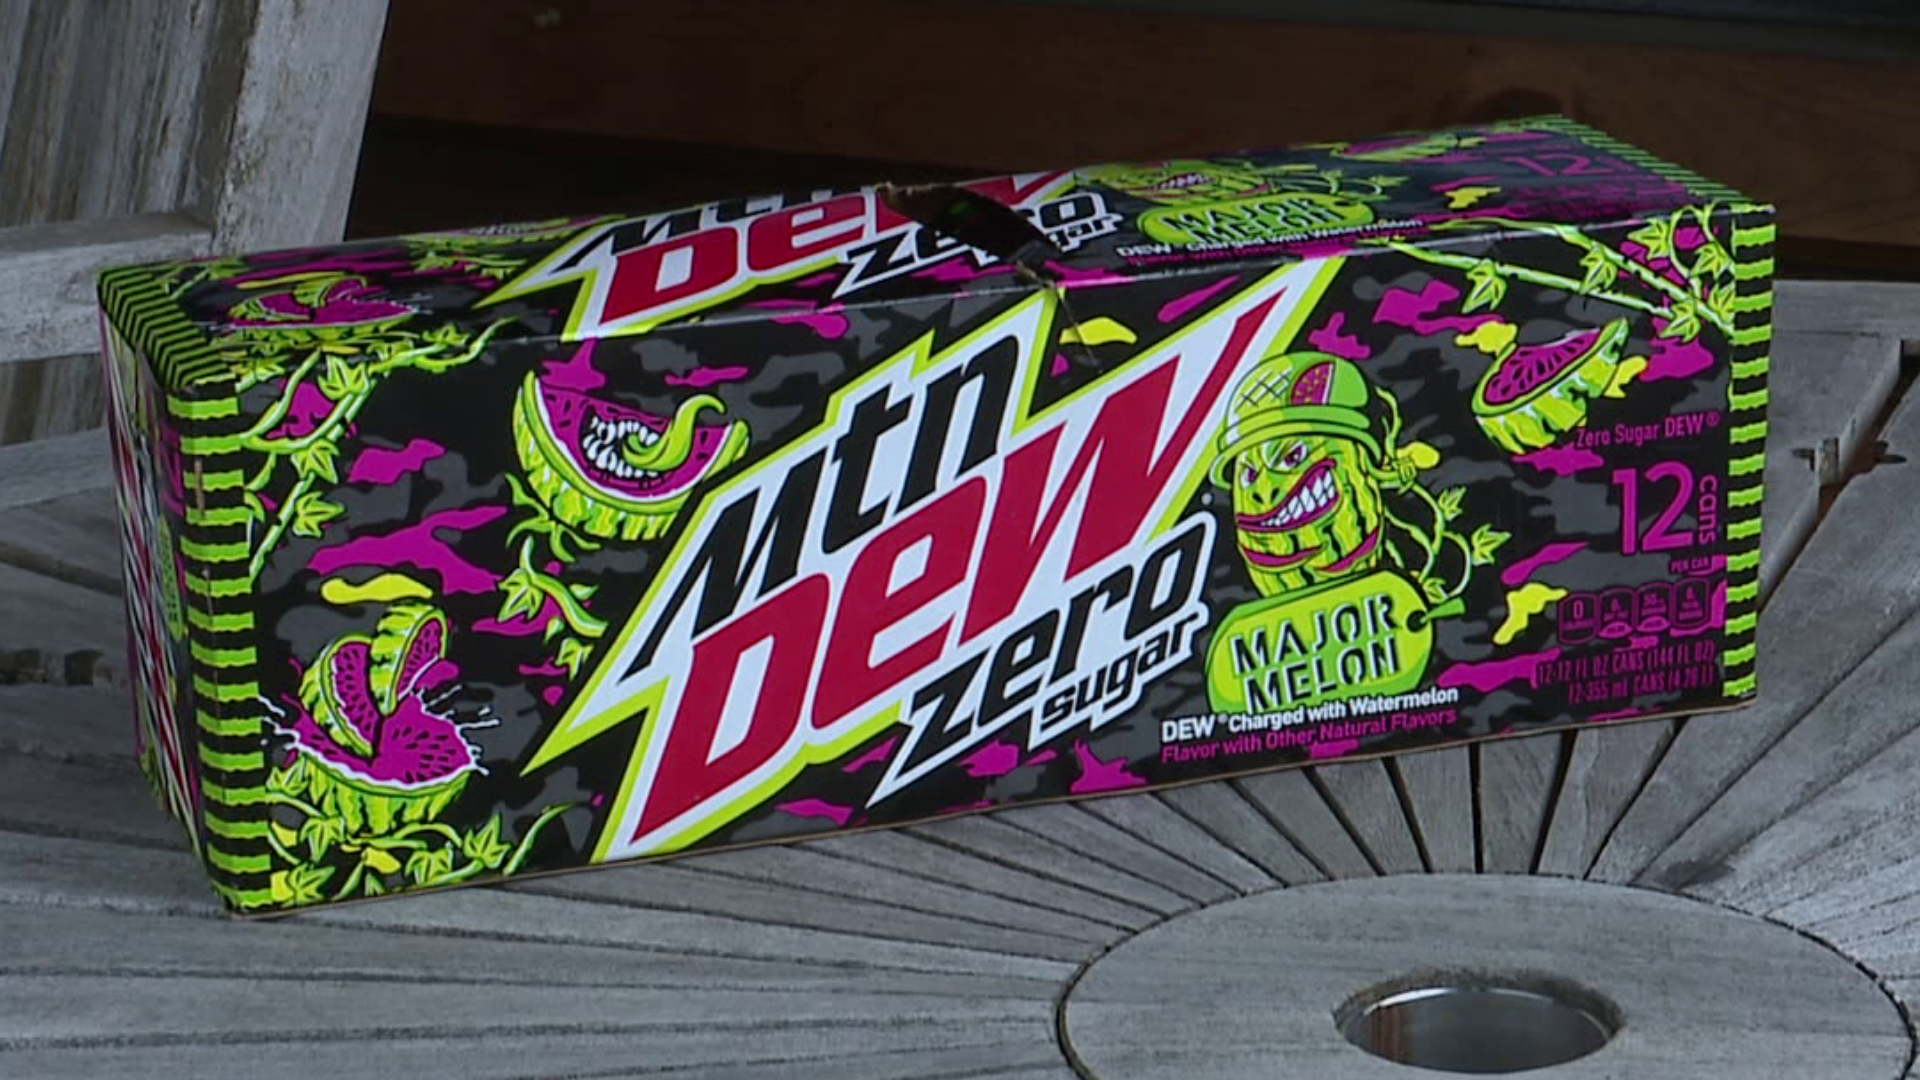 Mountain Dew released a new drink geared towards watermelon lovers.